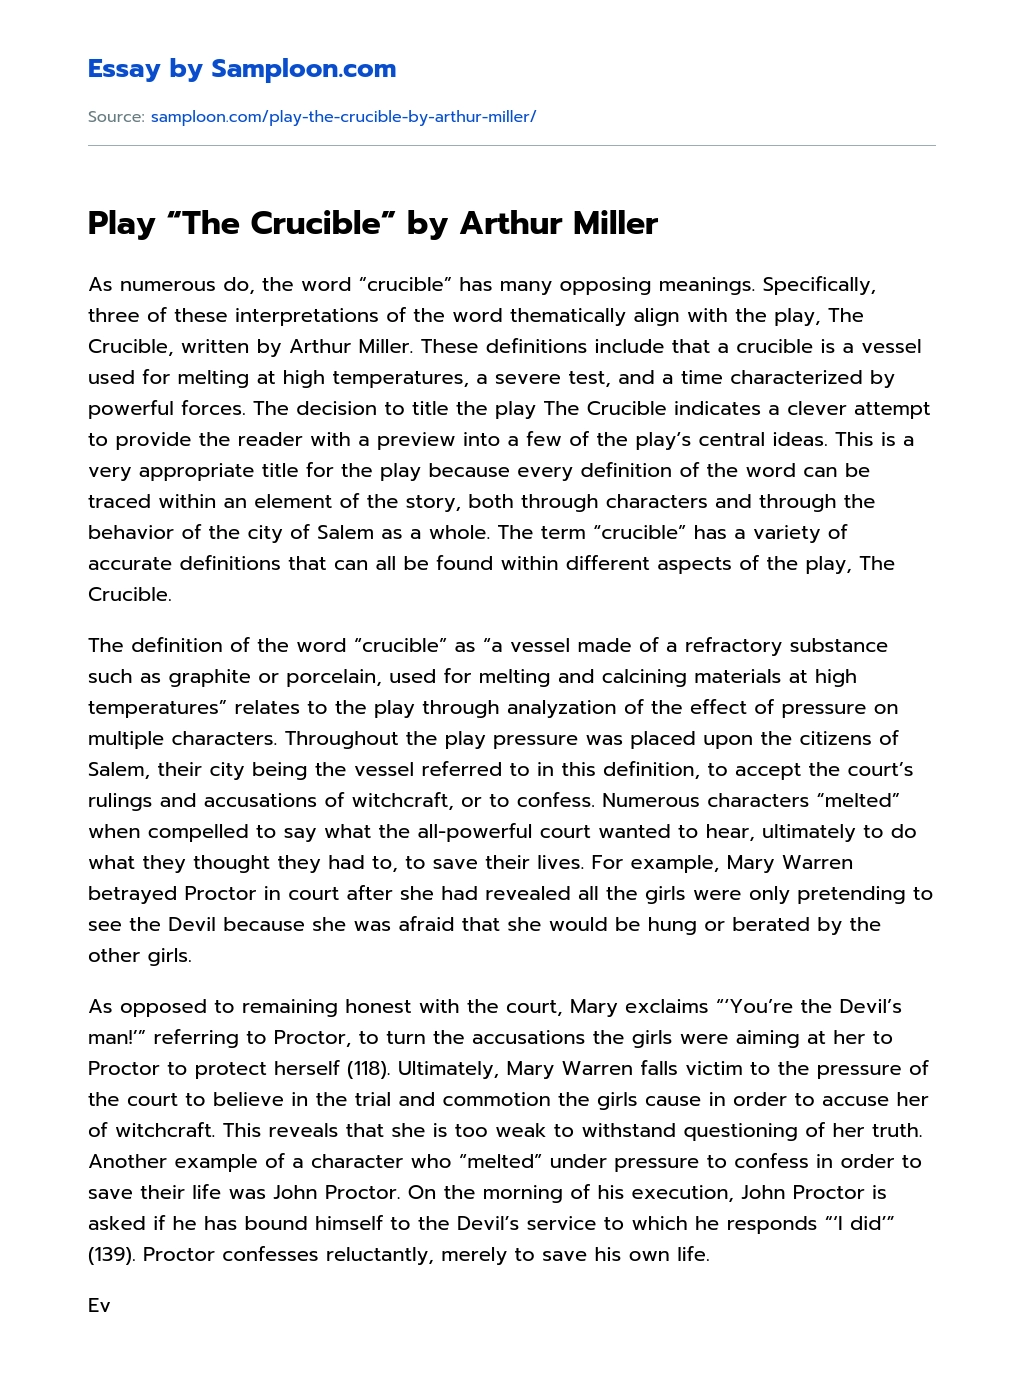 Play “The Crucible” by Arthur Miller Argumentative Essay essay